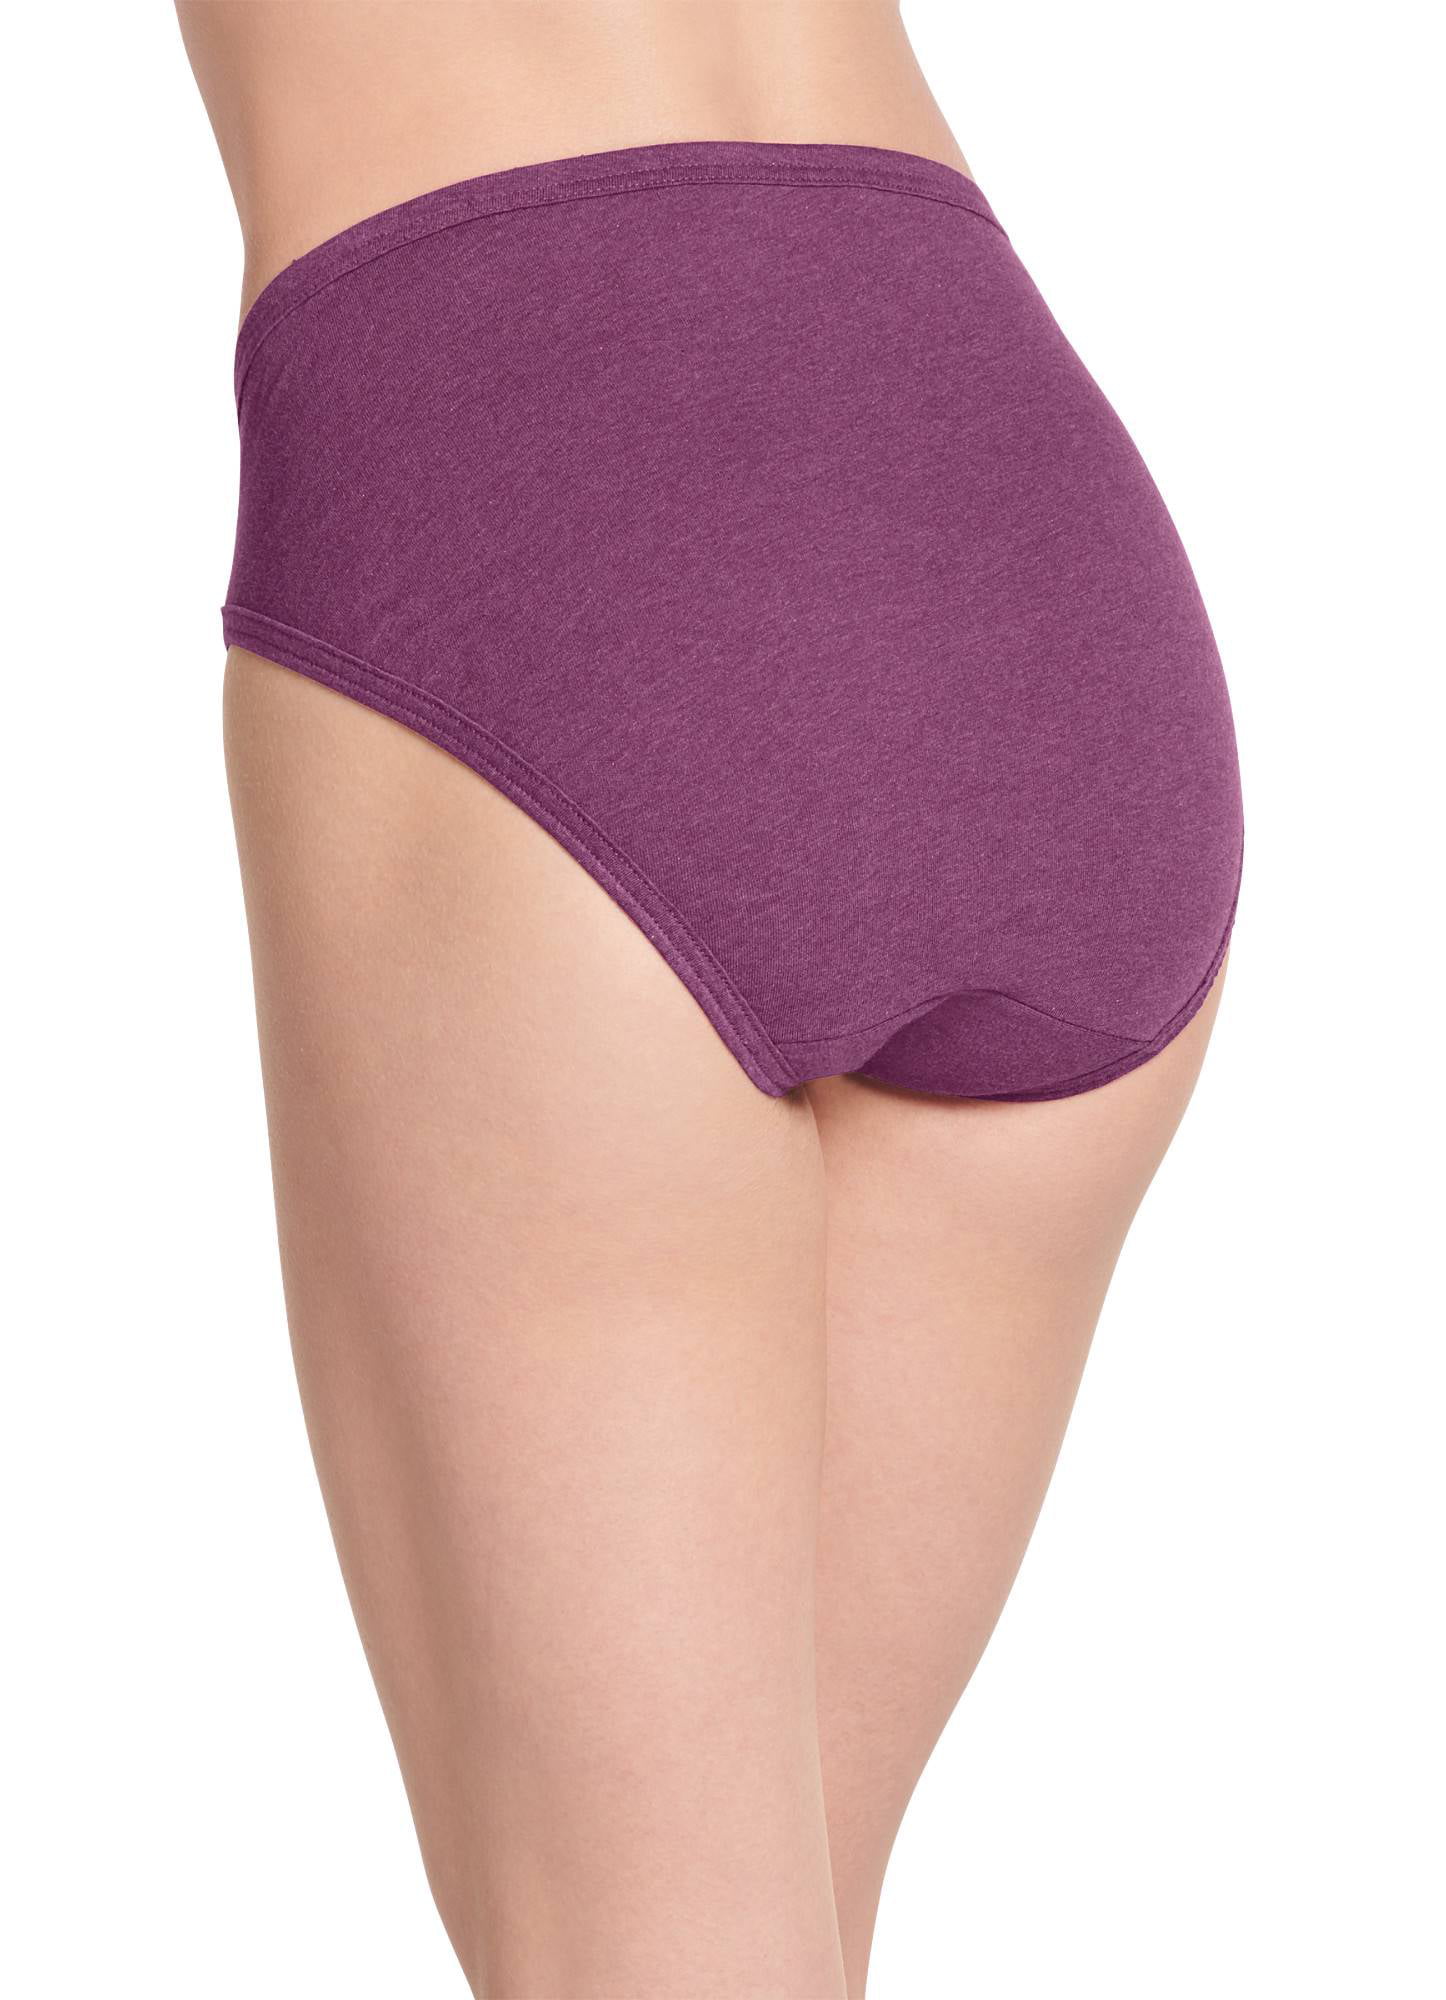 Jockey Women's Underwear Plus Size Classic French Cut - 3 Pack, Light  Pink/Floral Fields/Lavender, 8